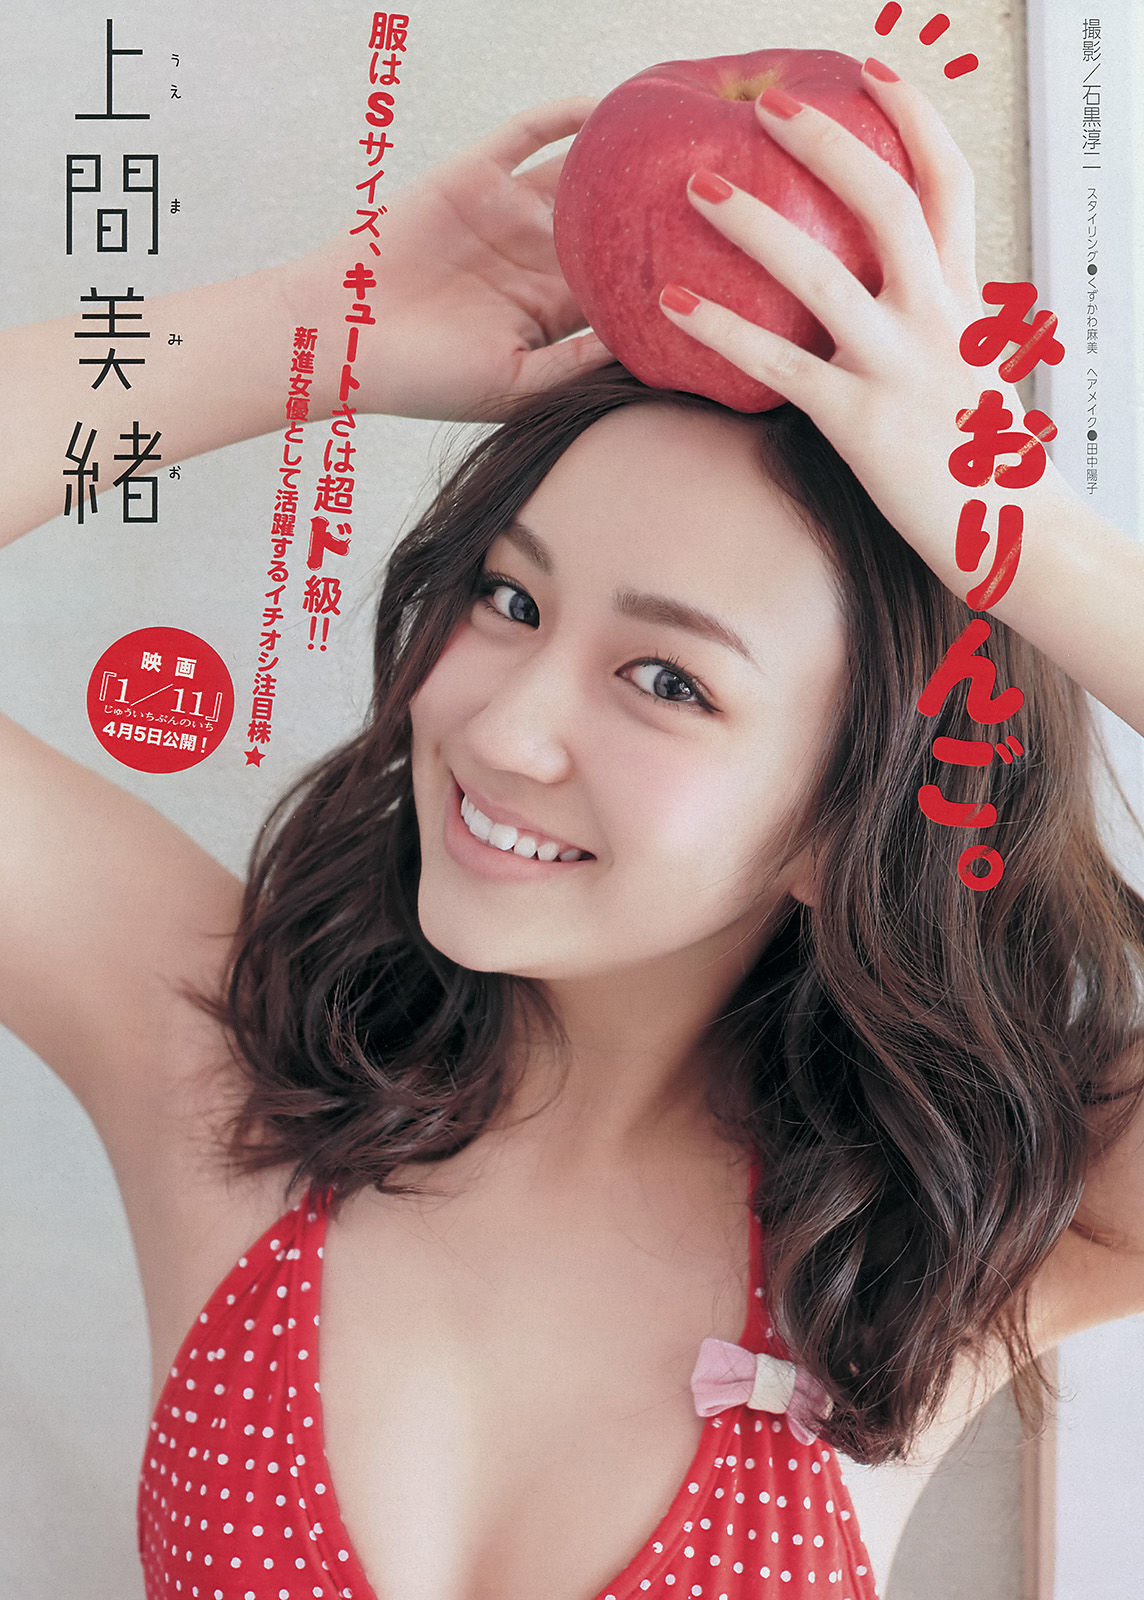 Young magazine. Mariya Nagao. Томоаки Нагао. Нагао Кей. Mio Kimijima DVD.